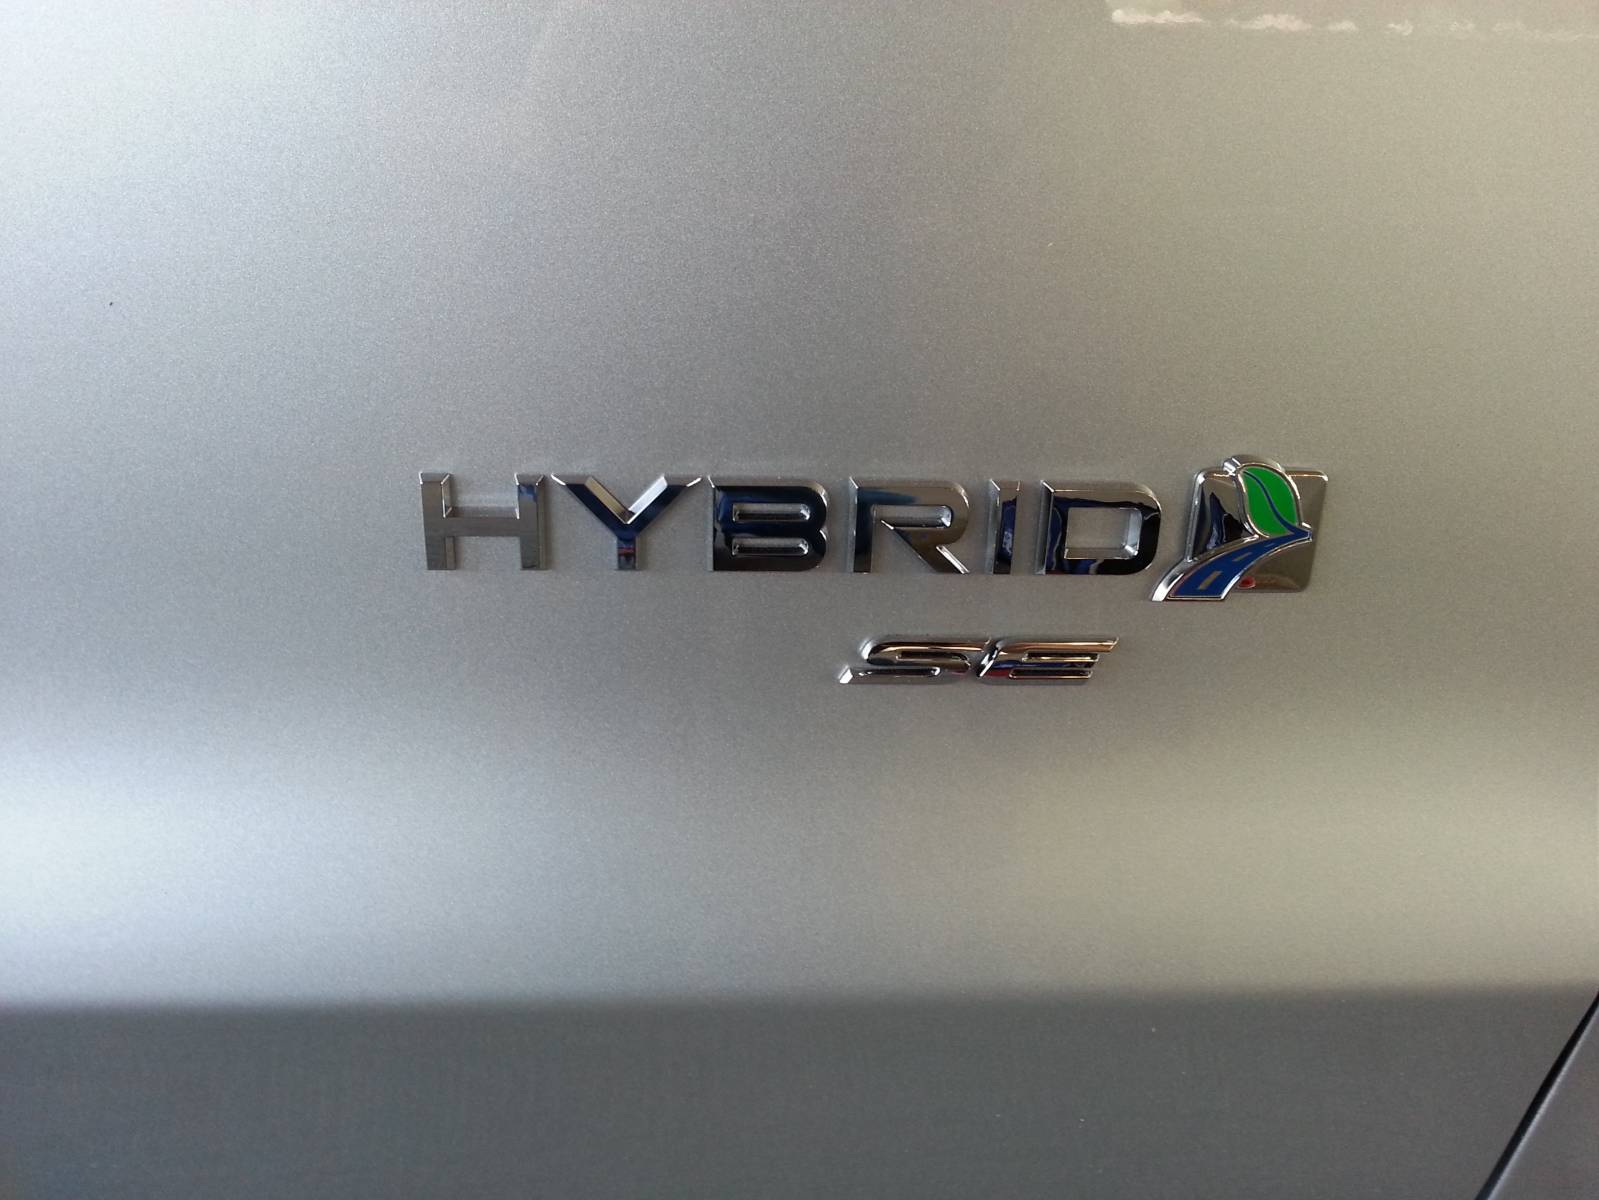 "SE" Emblem added below each "Hybrid" Emblem